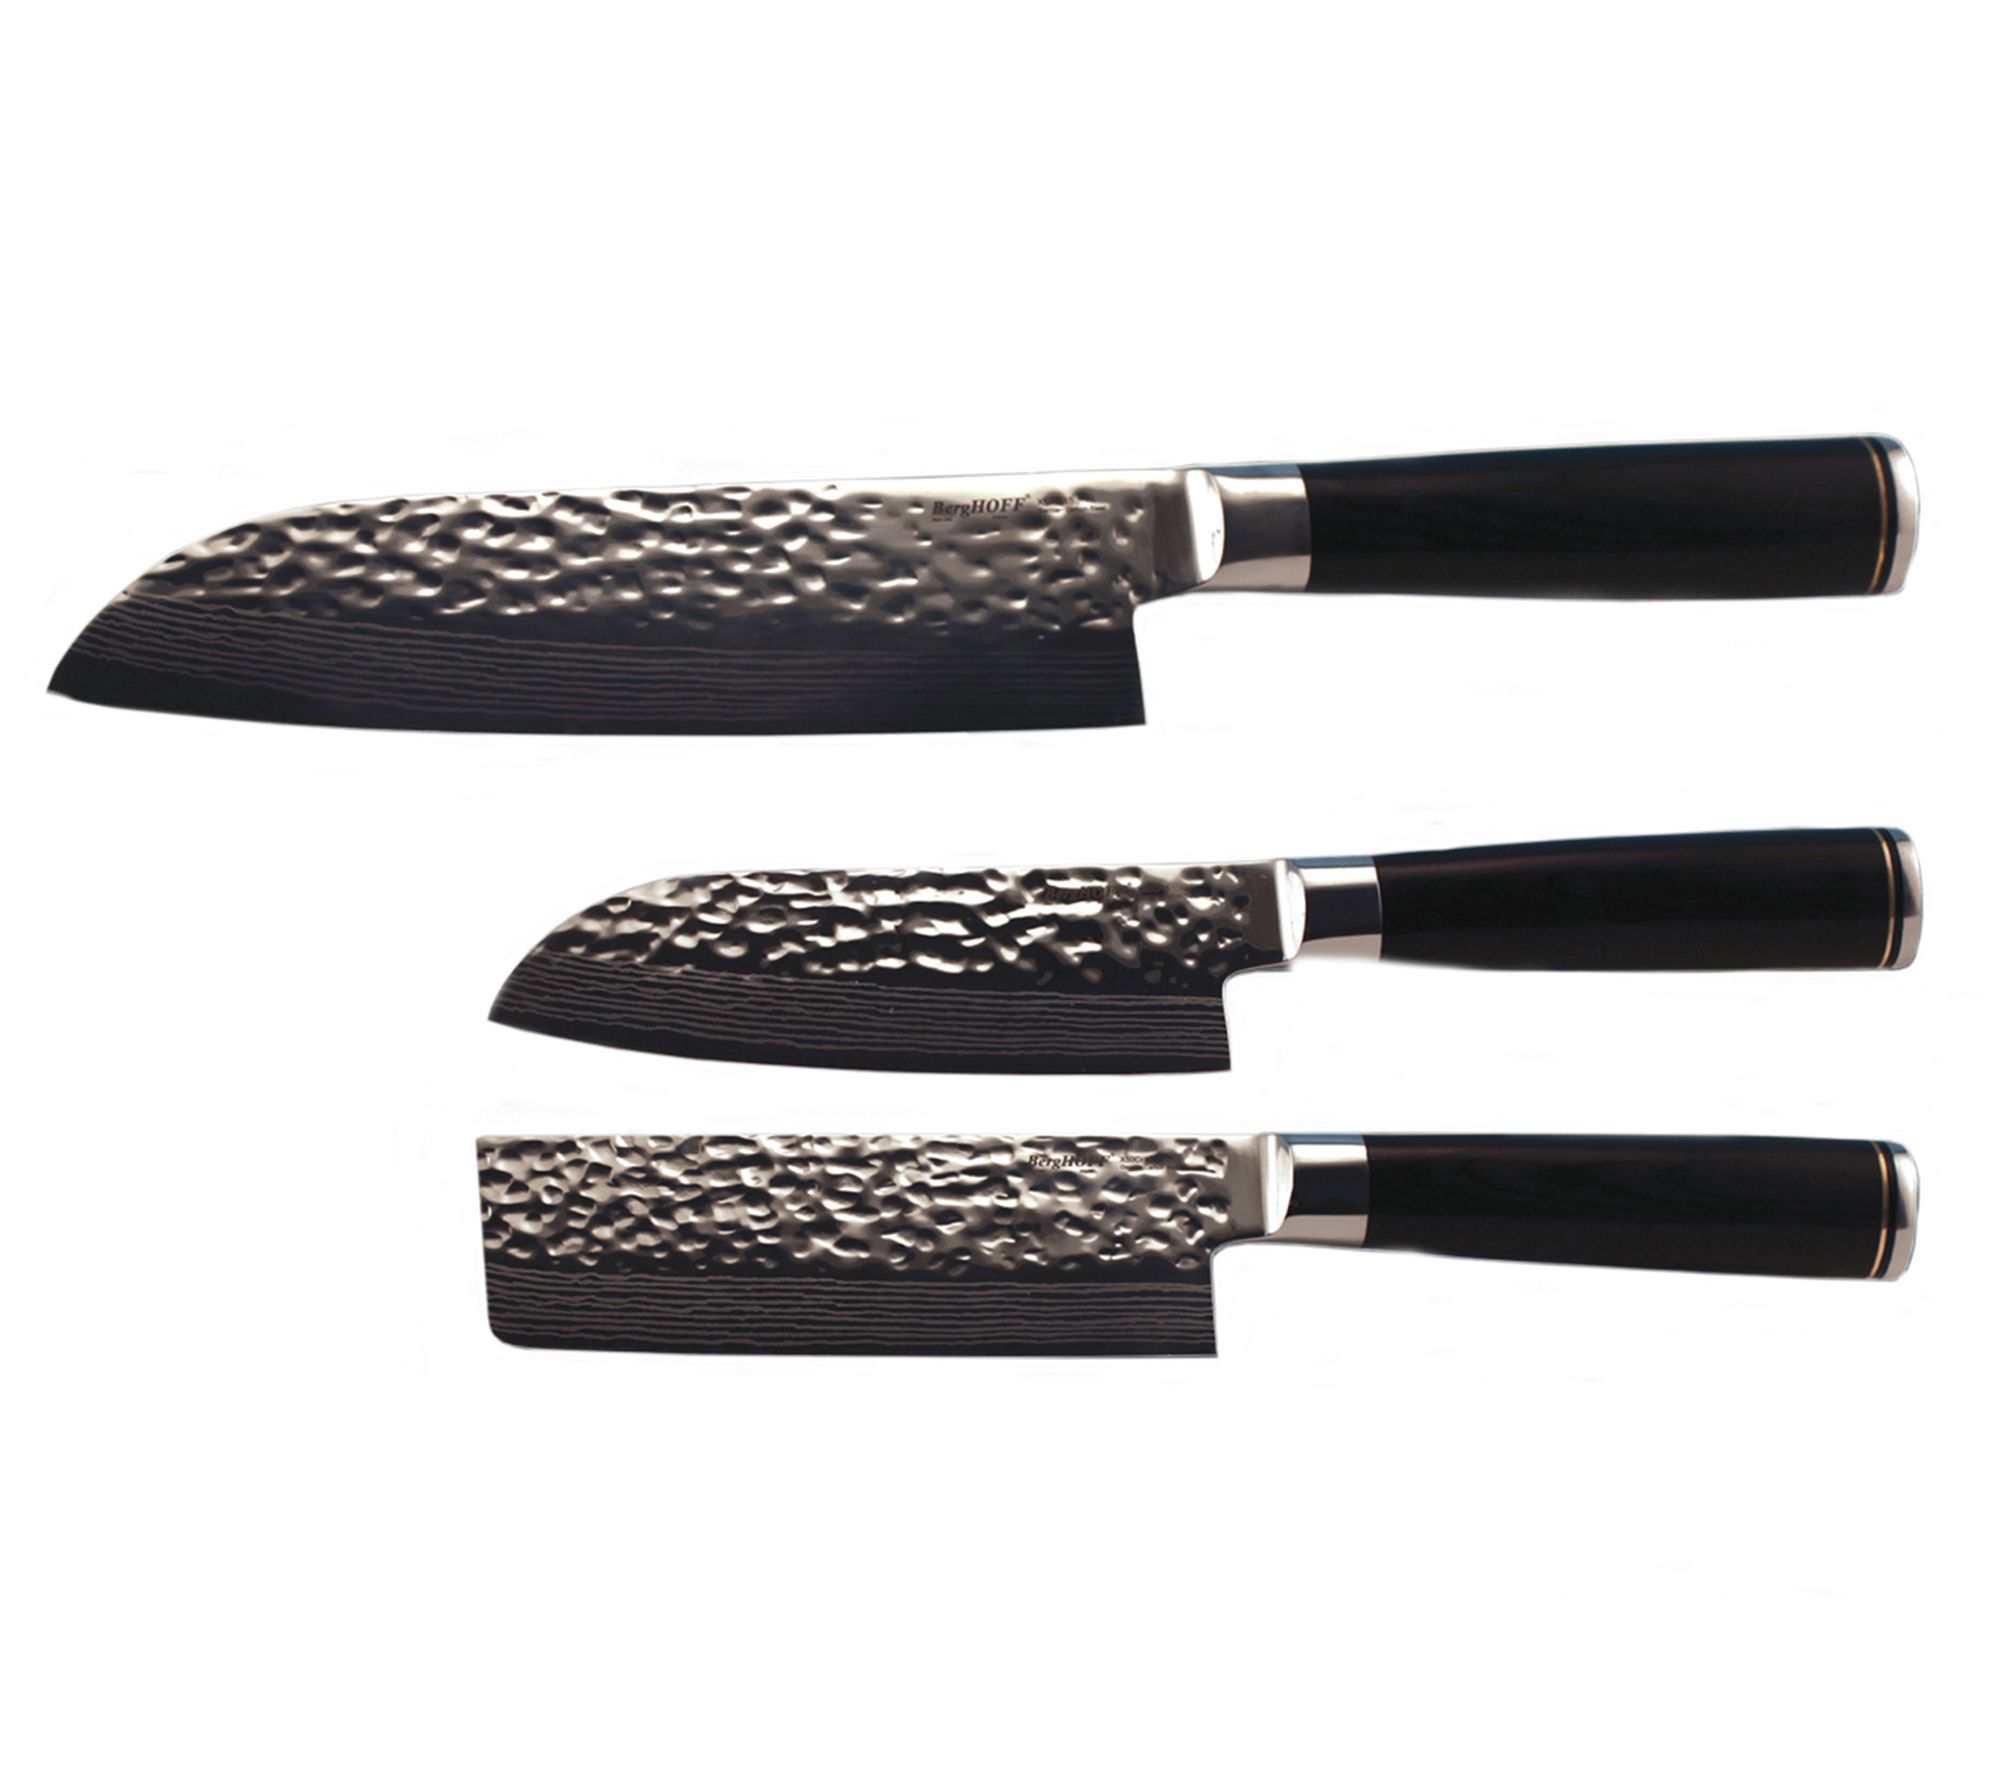 BergHOFF Straight 5 Piece Santoku Knife Set with Sharpener, Grey